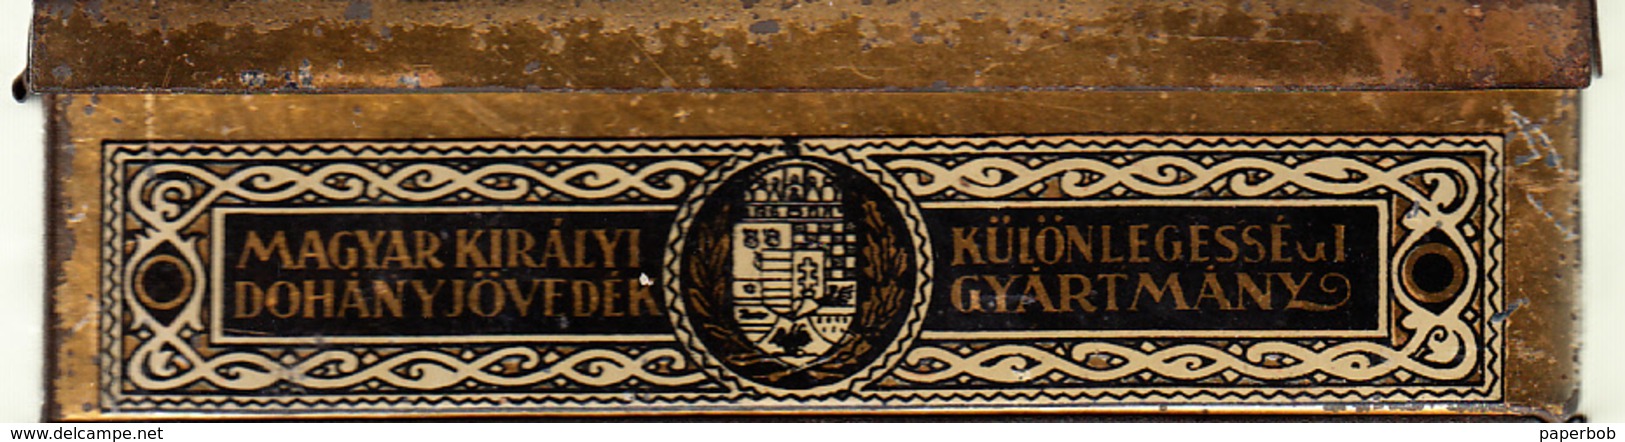 TOBACCO METAL BOX,HUNGARY 1920th ,13.5cm X 11cm X 3cm - Empty Tobacco Boxes